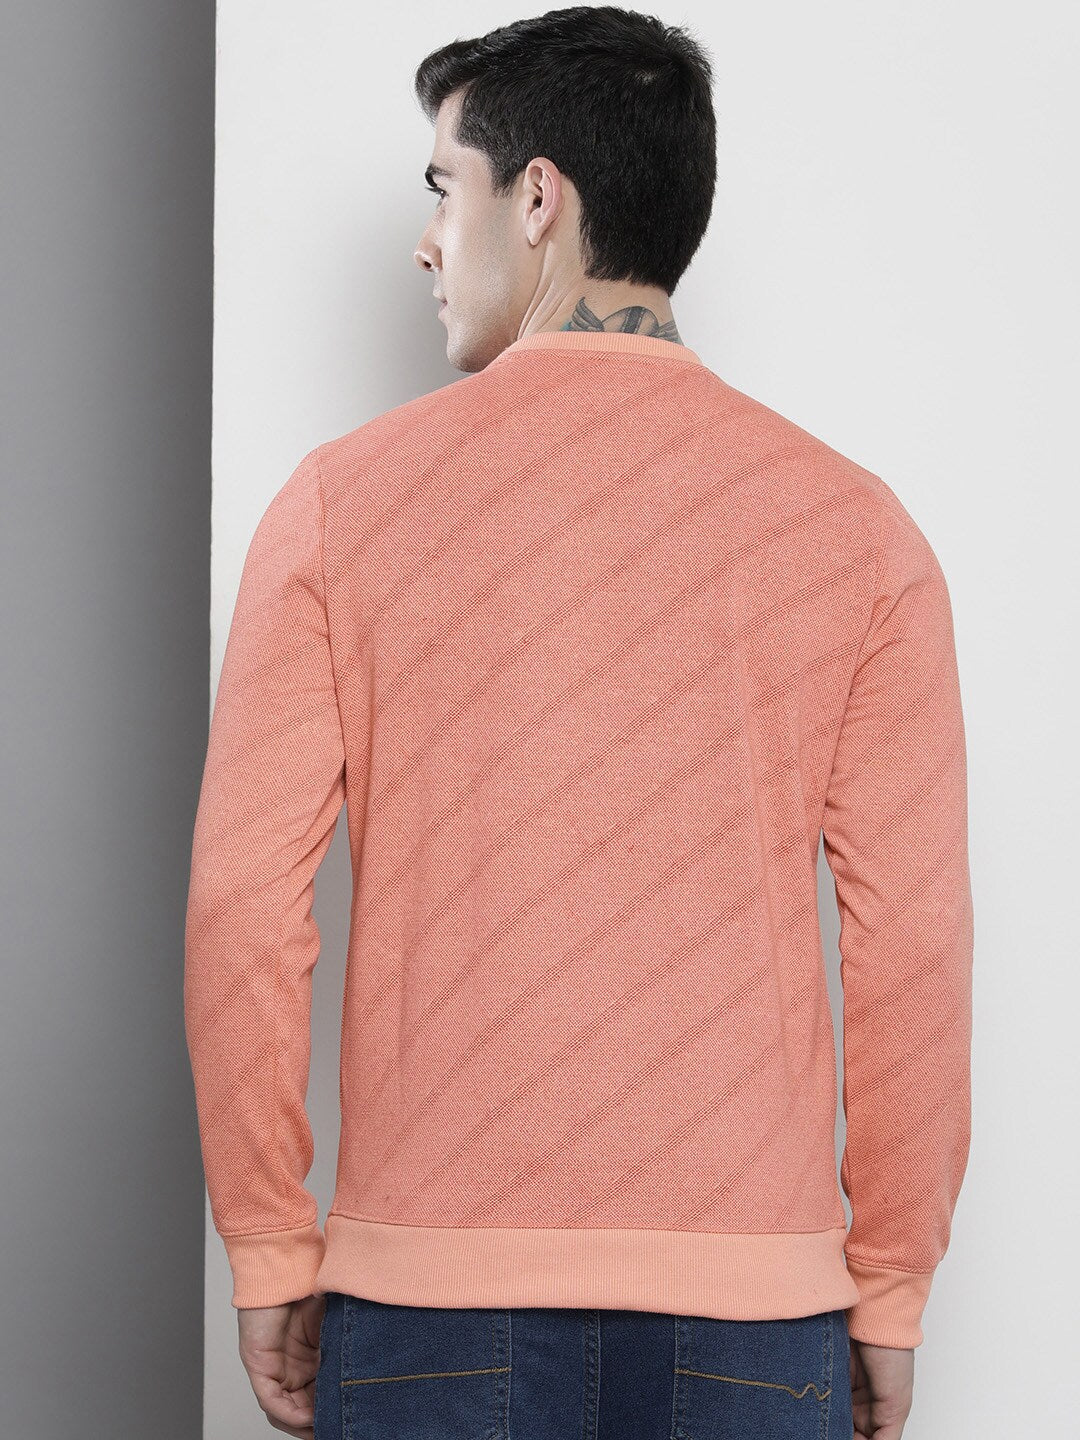 Shop Men Striped Sweatshirt Online.